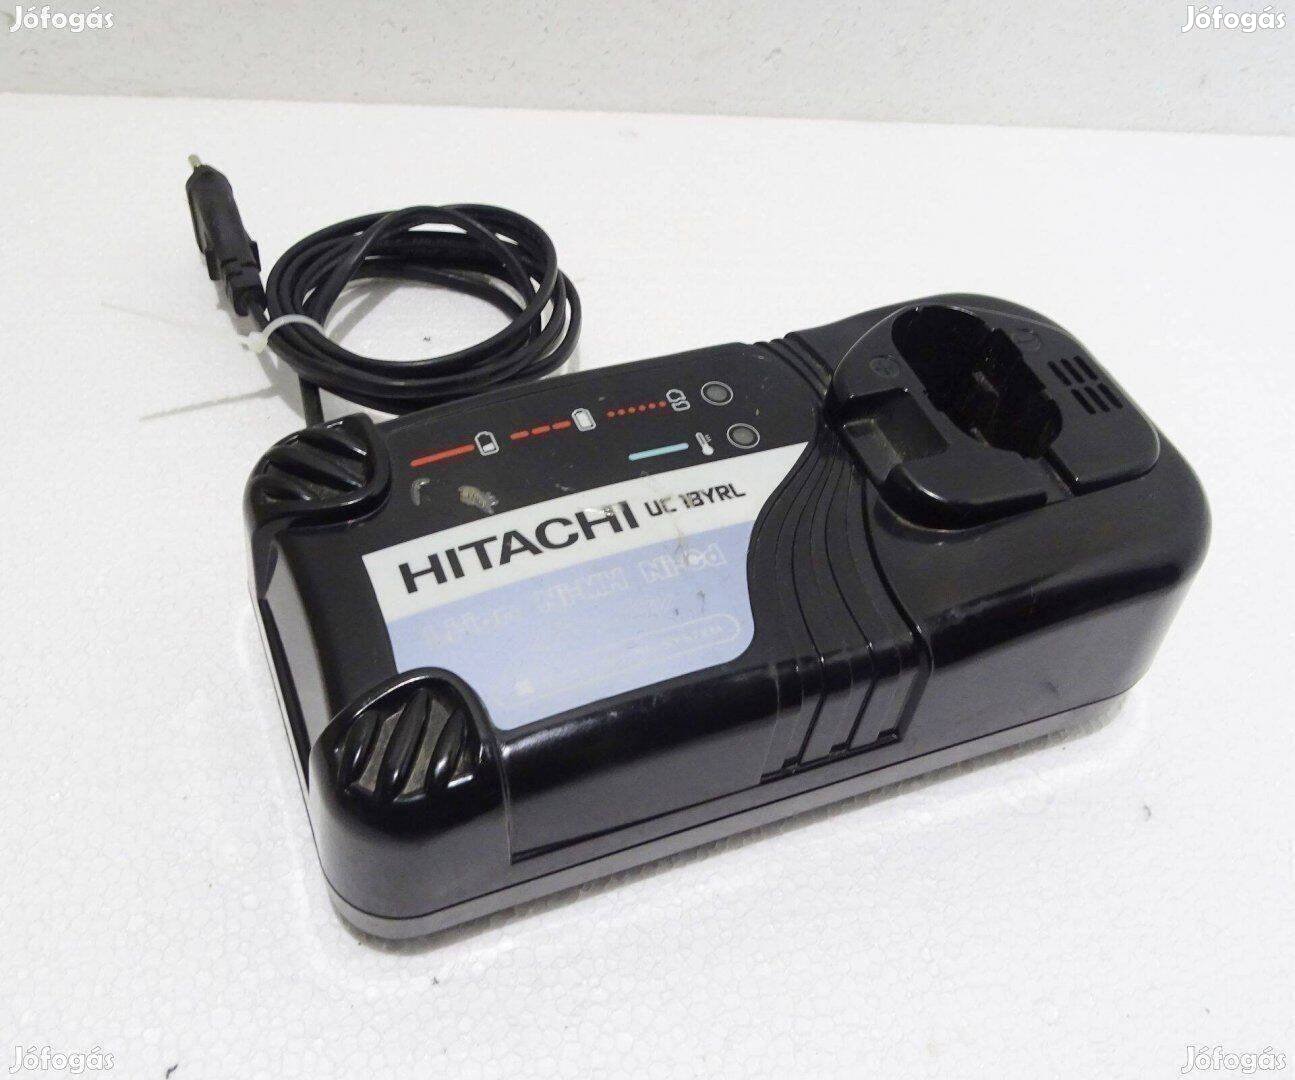 Hitachi UC18Yrl akku akkumulátor töltő 7.2 - 18 V Li-Ion Ni-Mh Ni-Cd